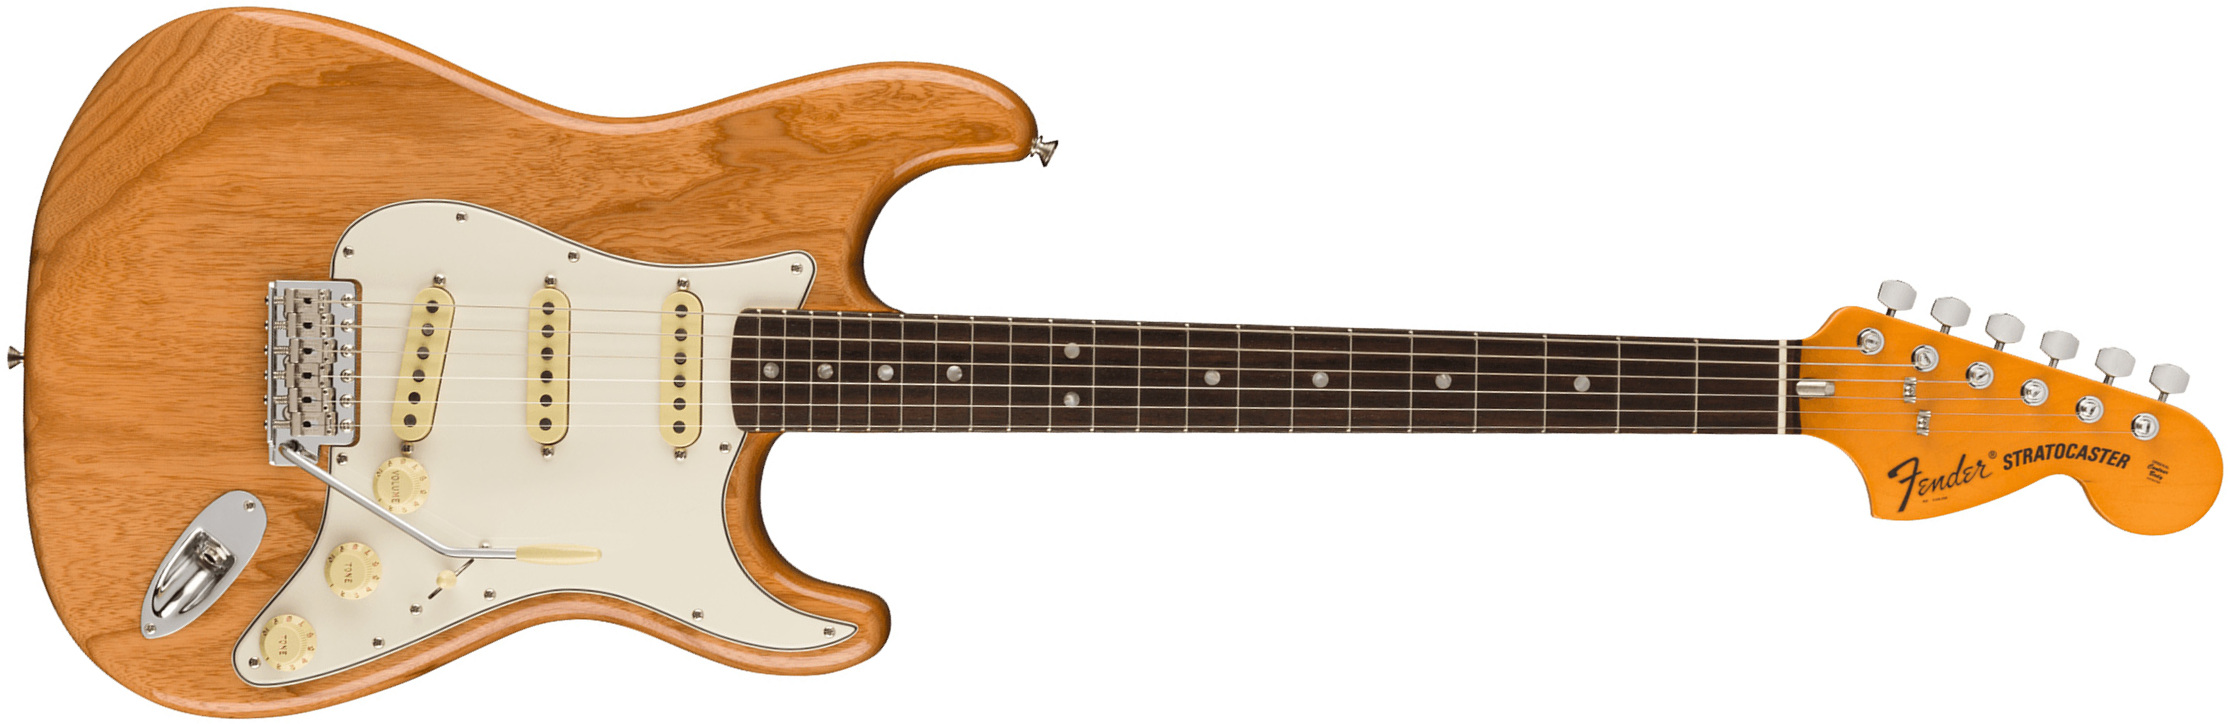 Fender Strat 1973 American Vintage Ii Usa 3s Trem Rw - Aged Natural - Guitarra eléctrica con forma de str. - Main picture